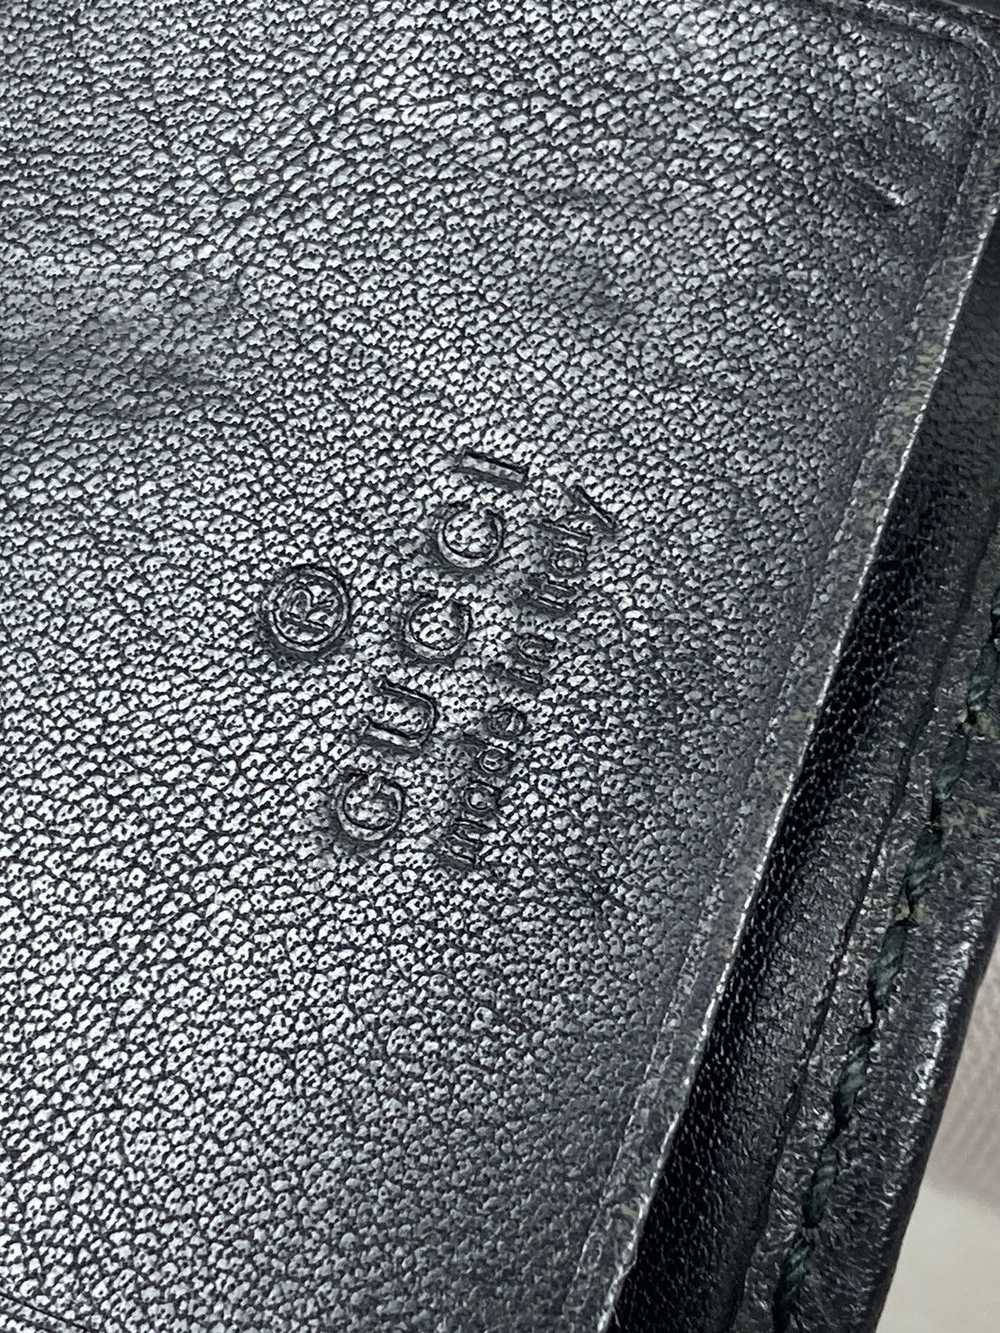 Gucci Gucci GG monogram leather key holder - image 5